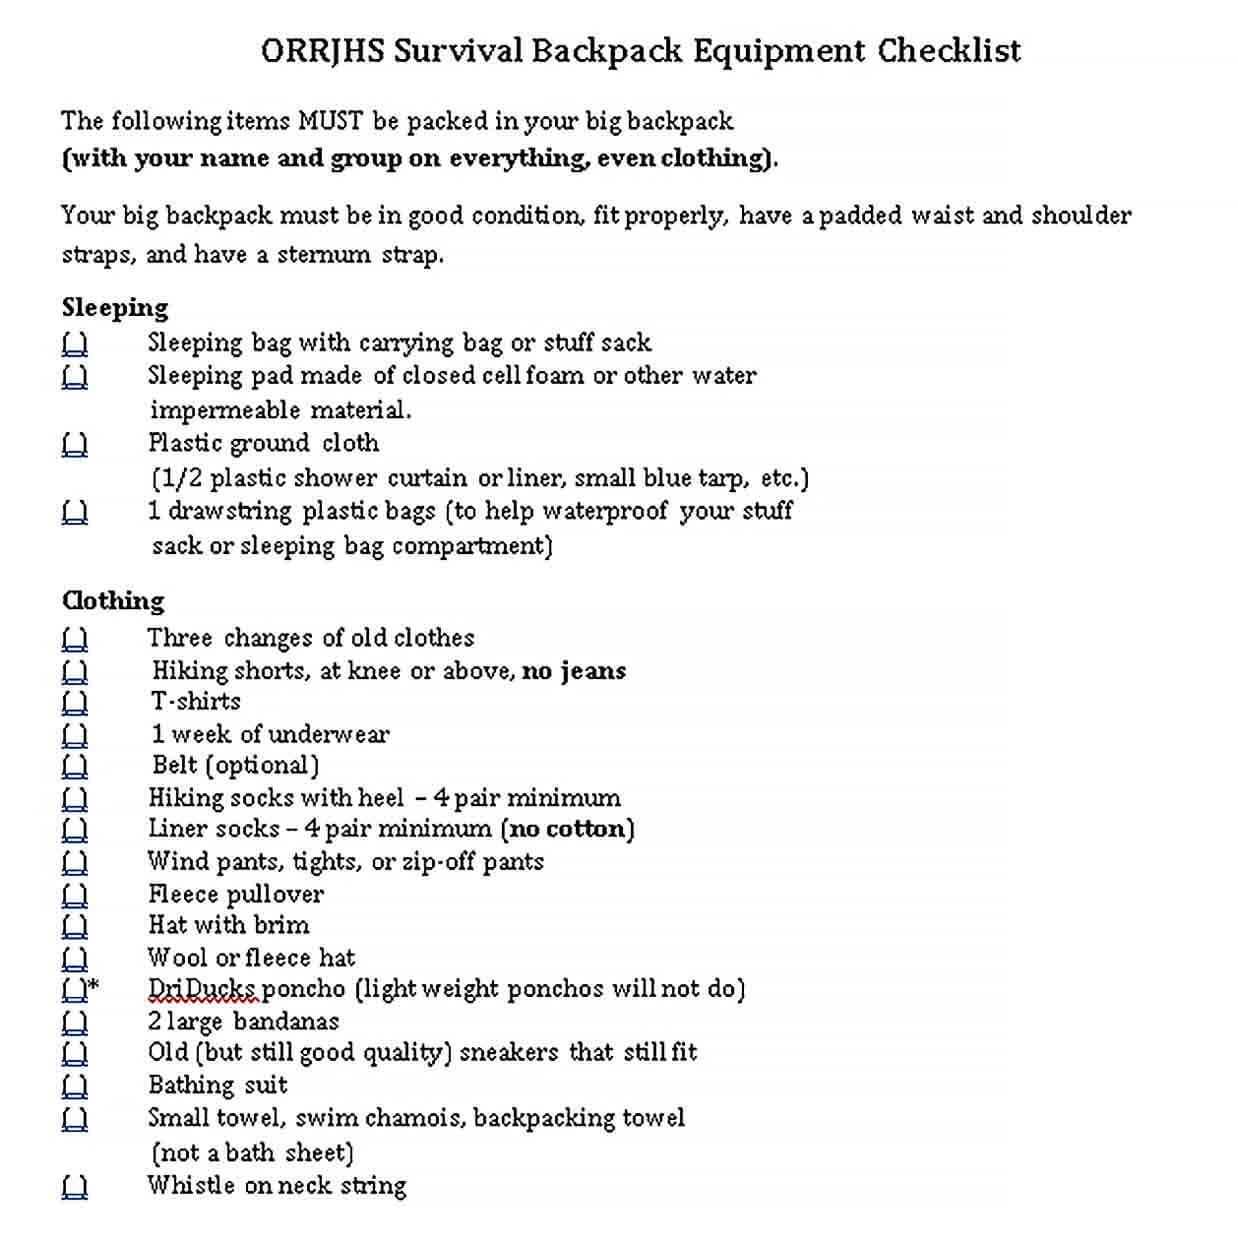 Sample Survival Backpack Equipment Checklist